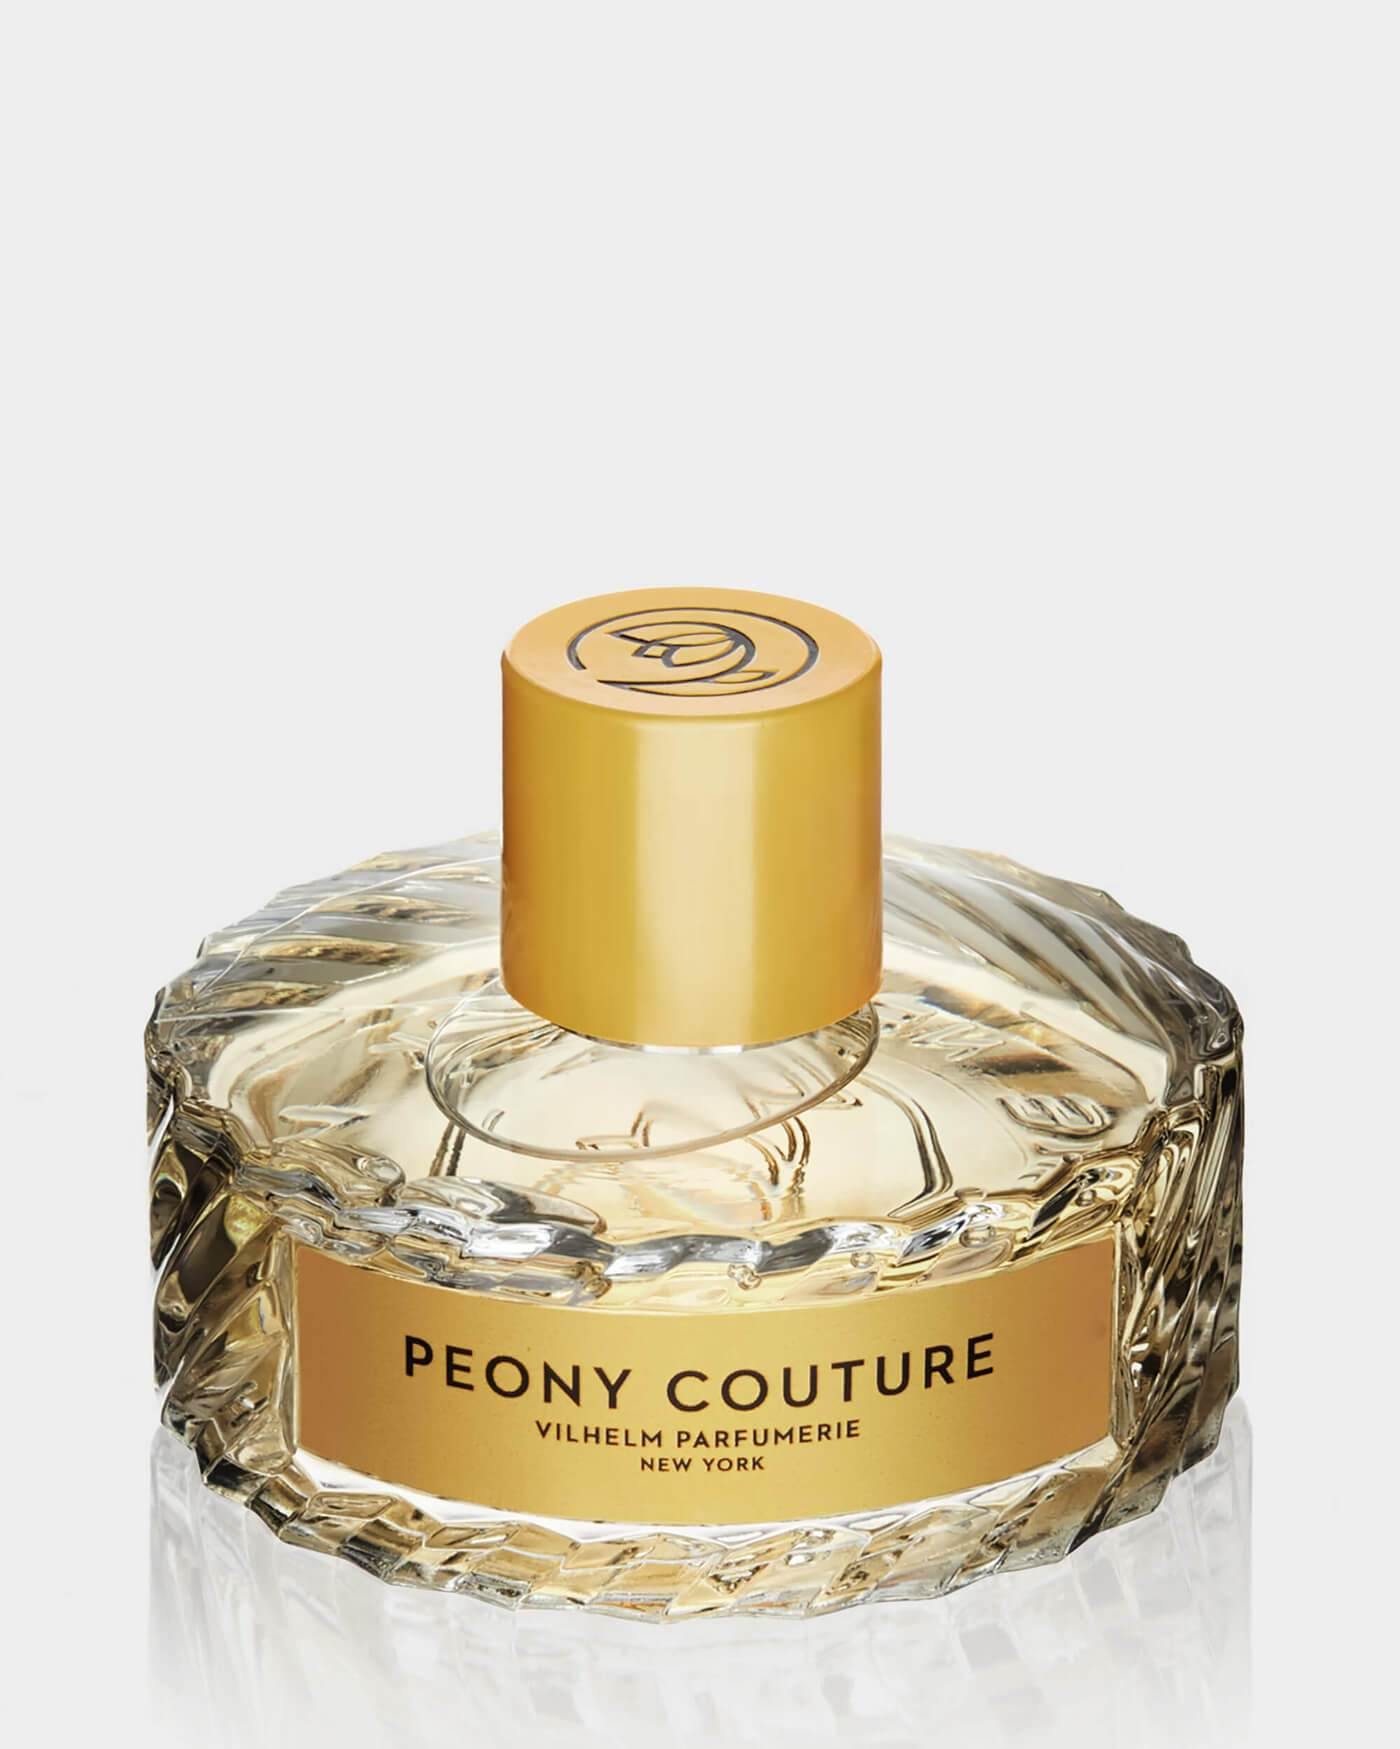 PEONY COUTURE - Vilhelm Parfumerie